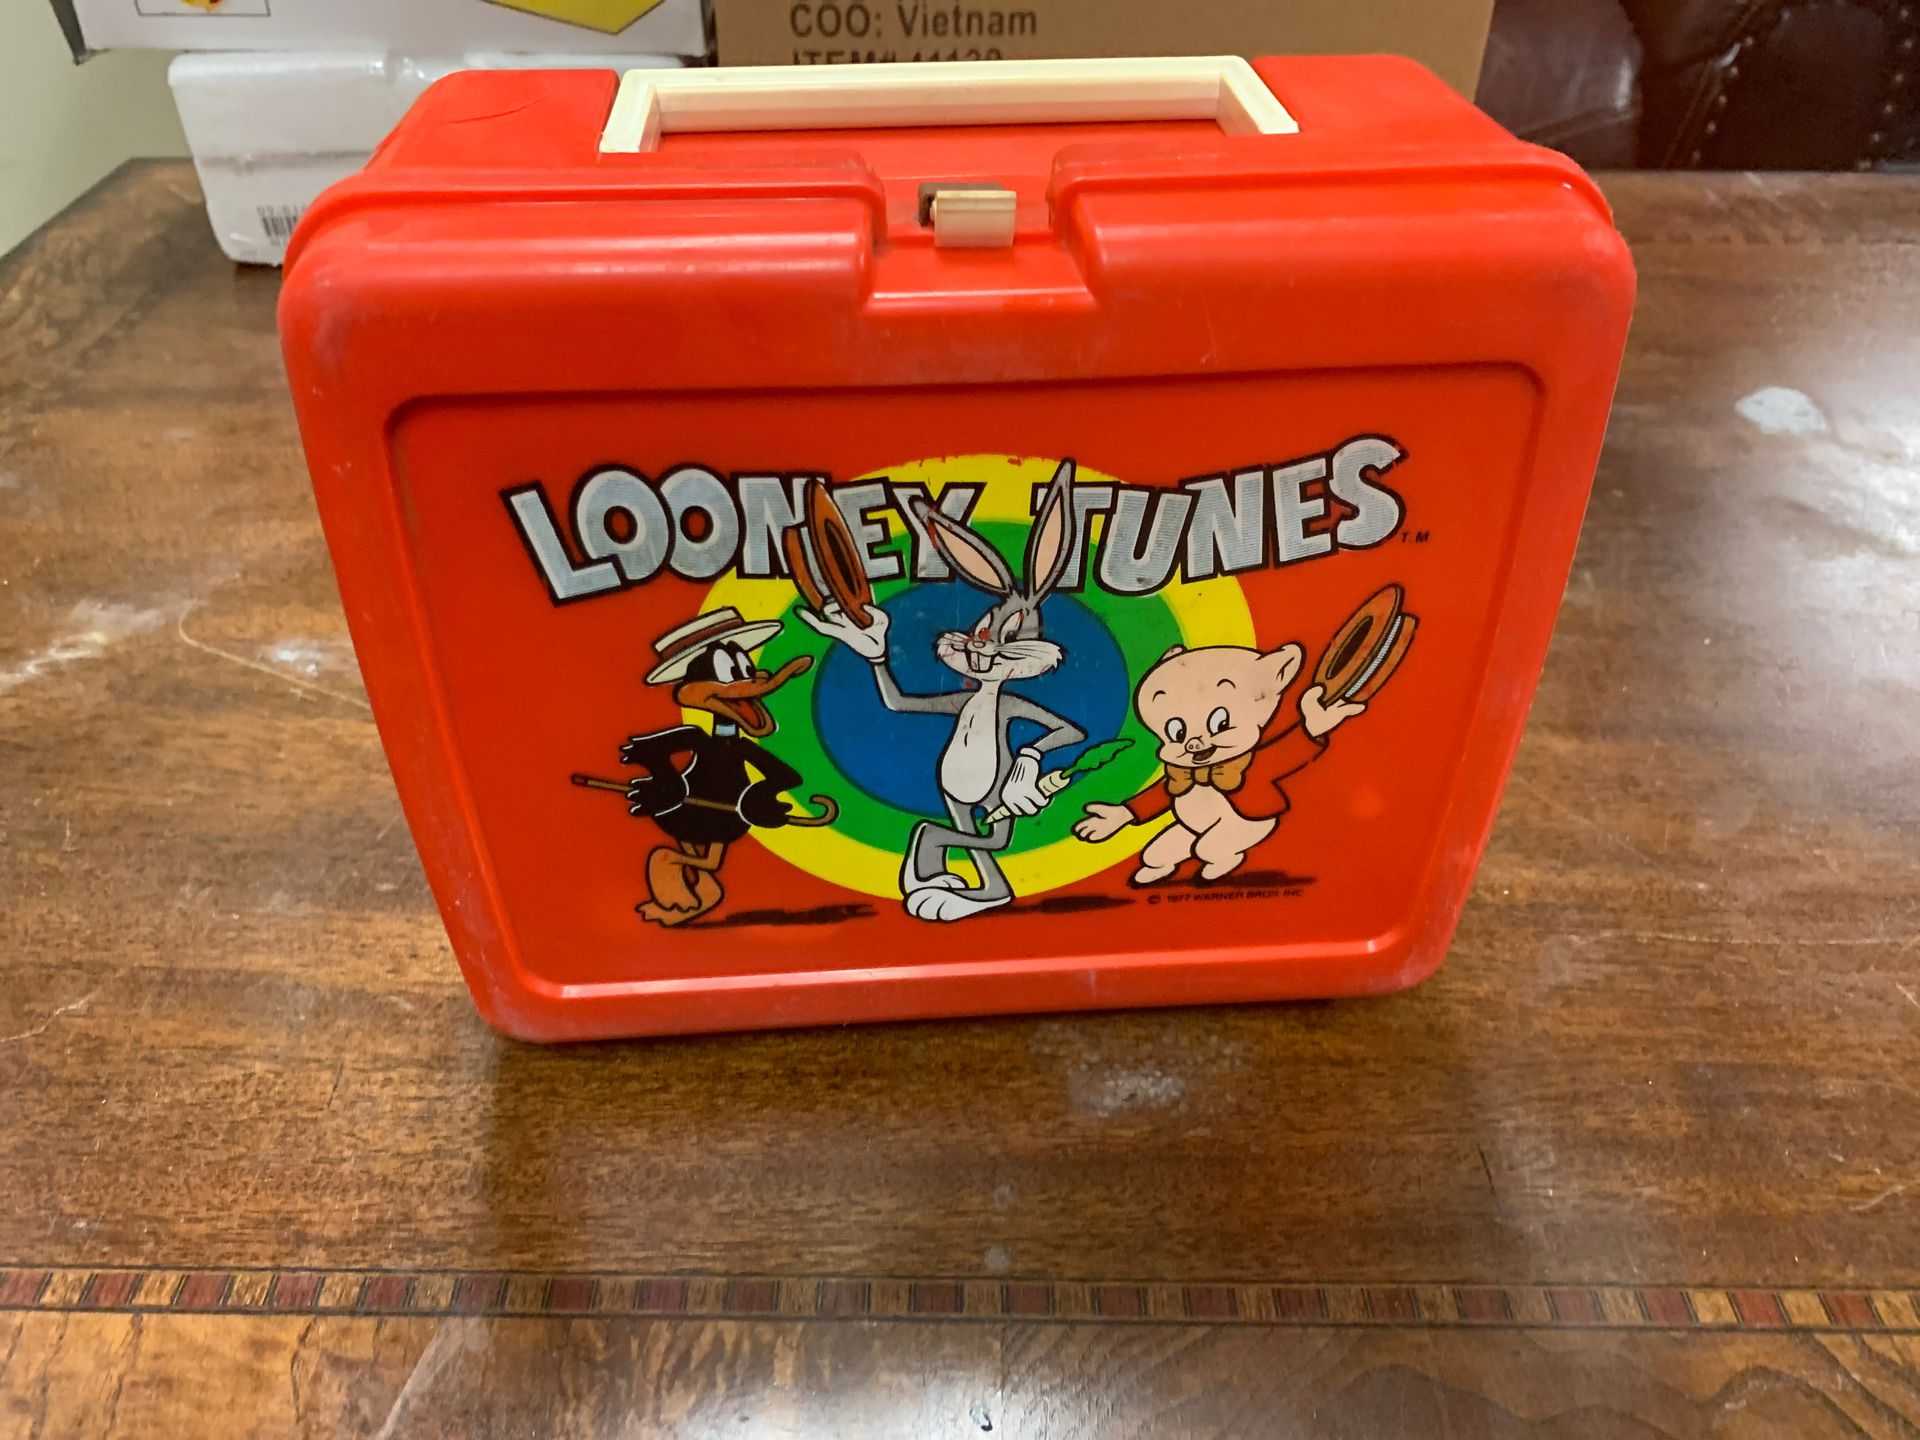 Loony tunes lunchbox